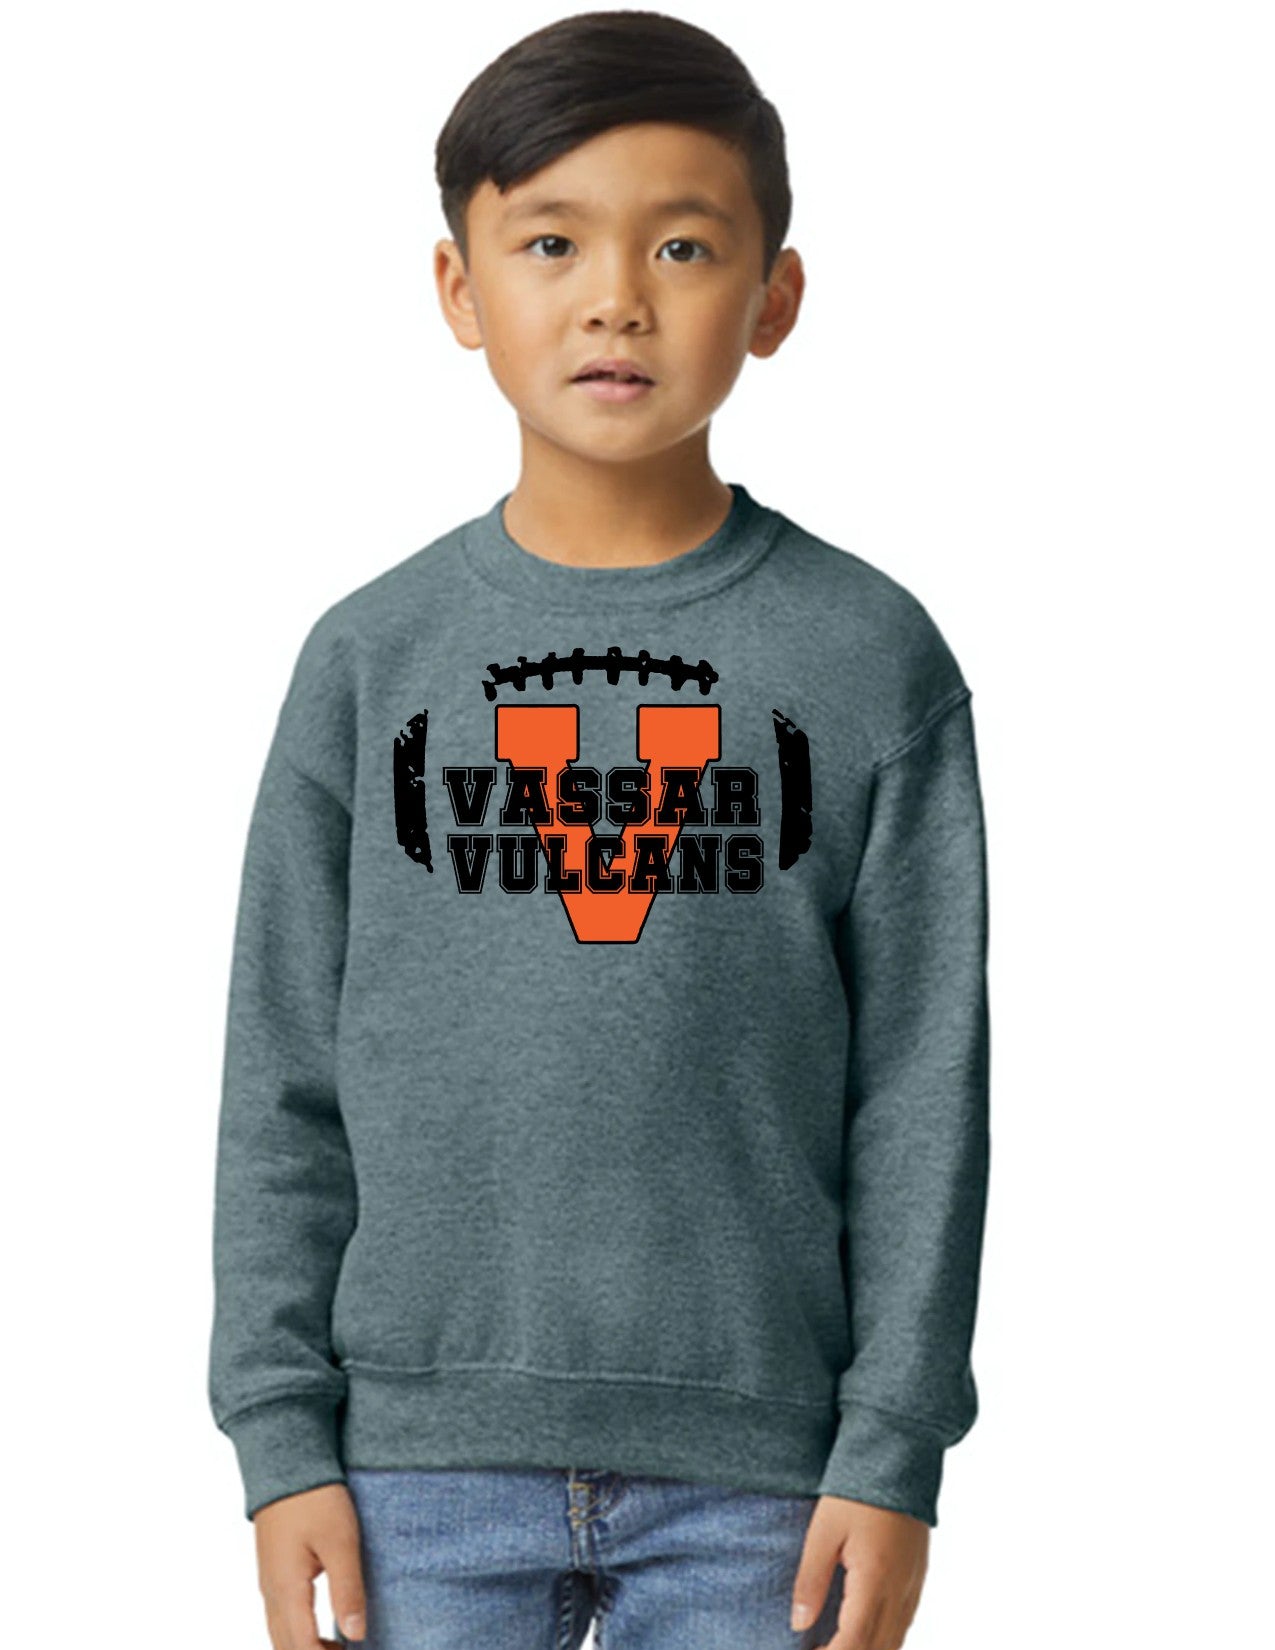 Vassar Football Youth Sweatshirt